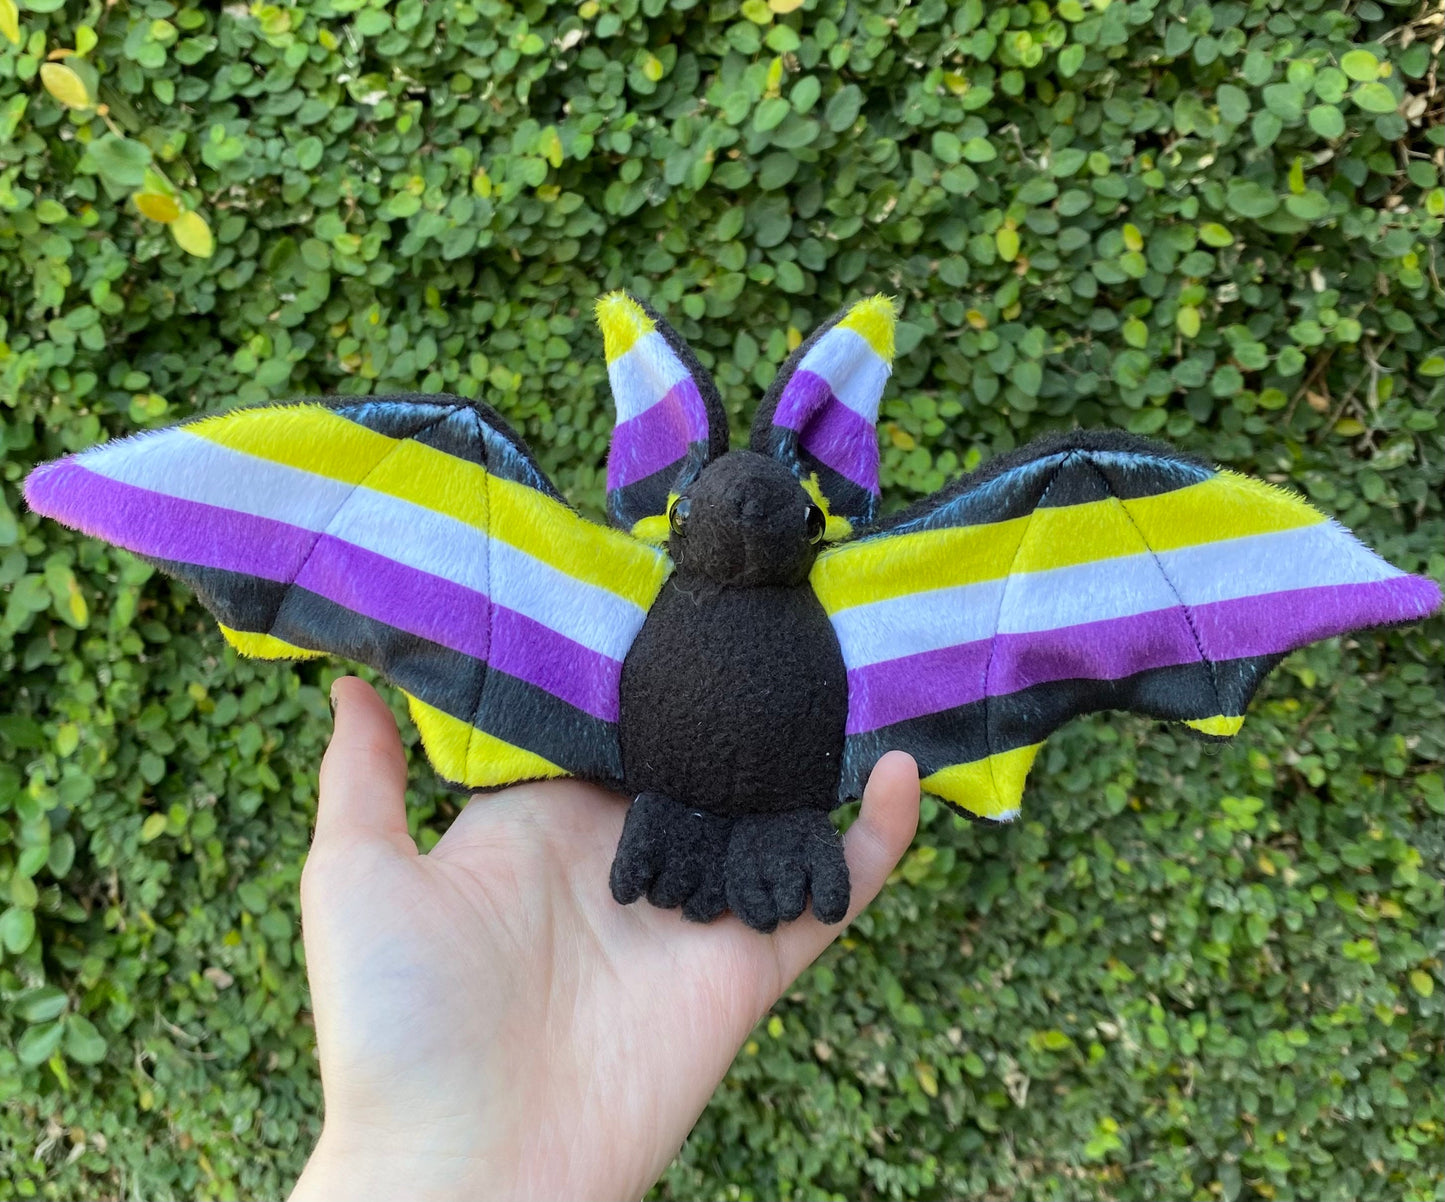 Nonbinary Bat Plushie